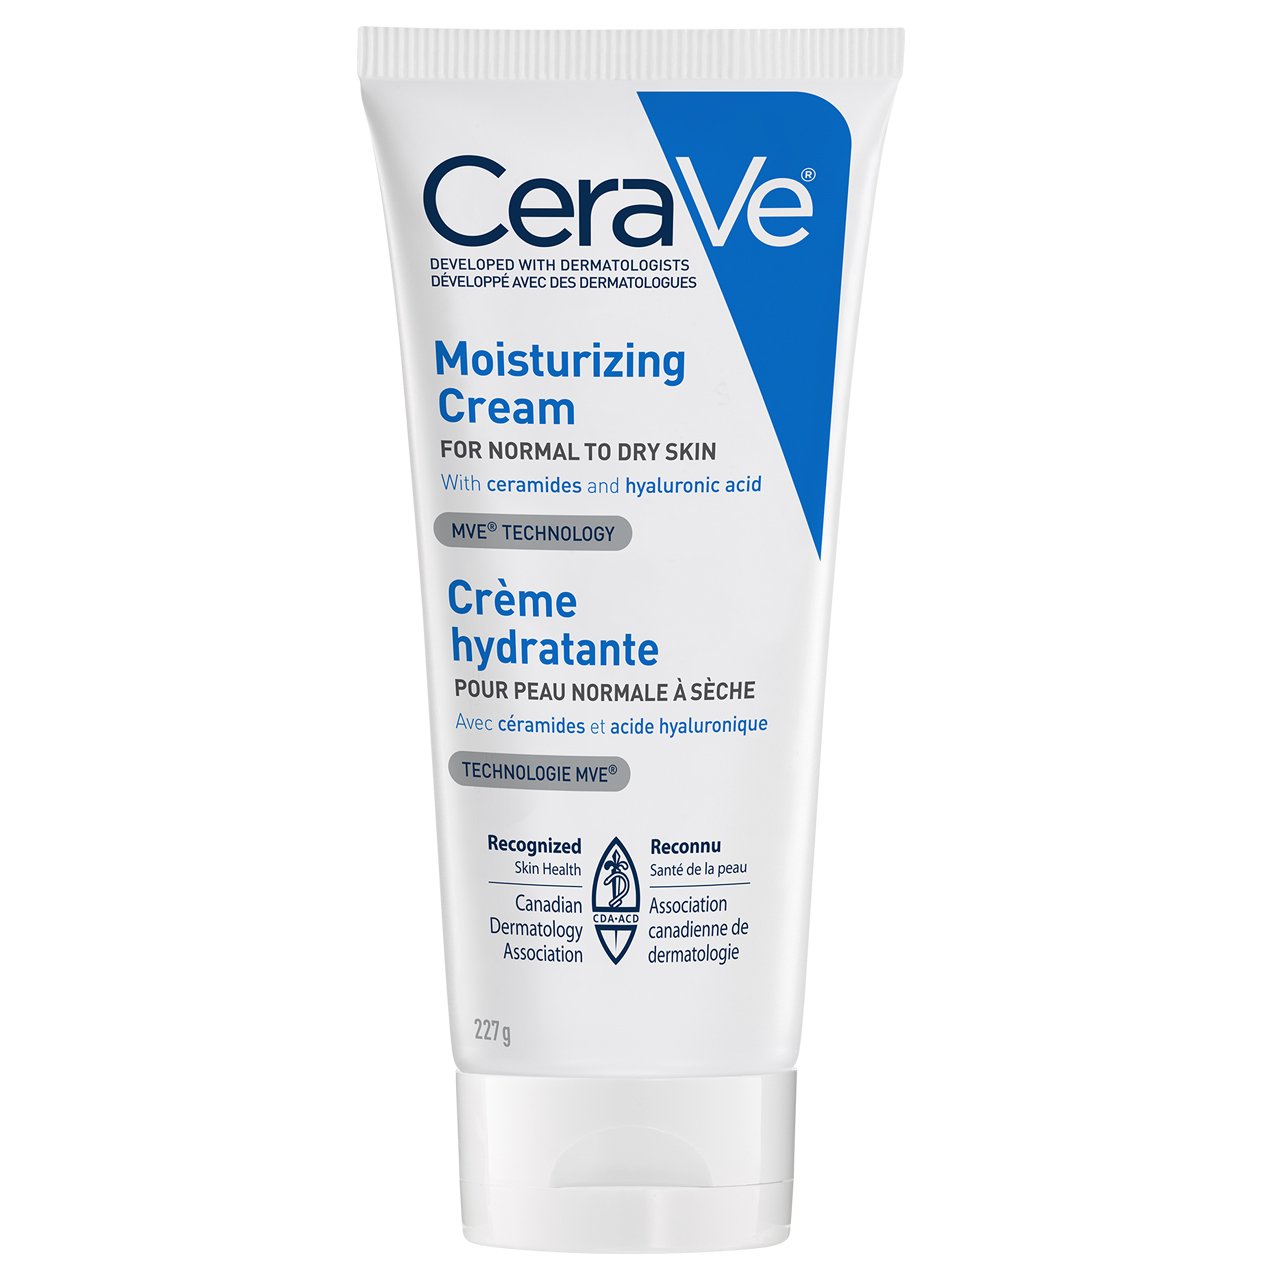 A photo of a tube of CeraVe moisturizing cream